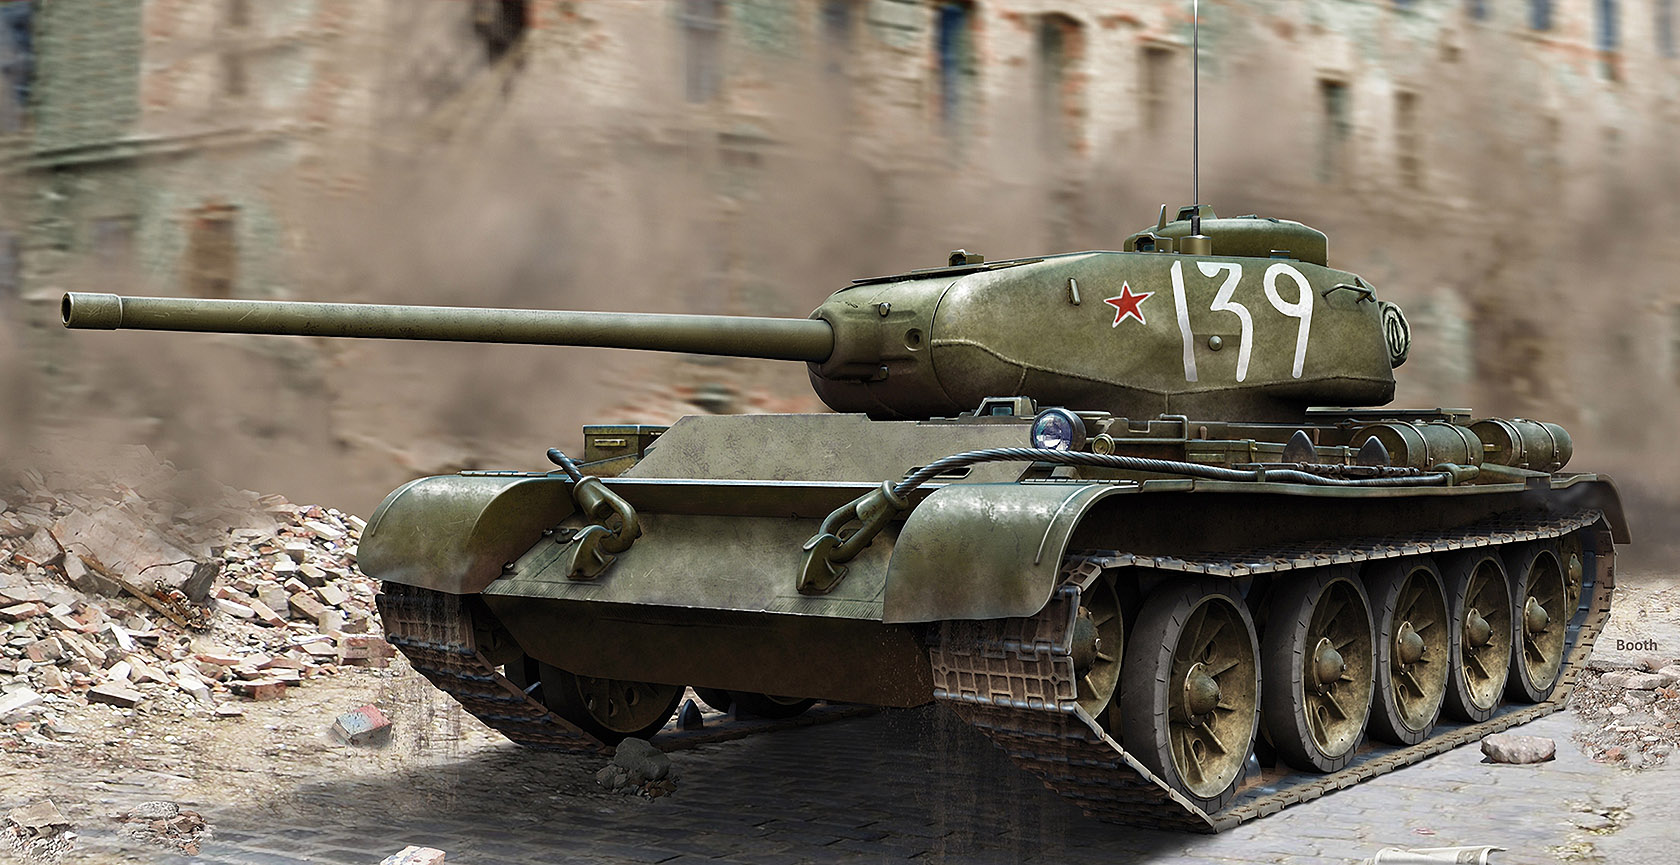 General 1680x865 tank army military military vehicle artwork debris T-44 Russian/Soviet tanks